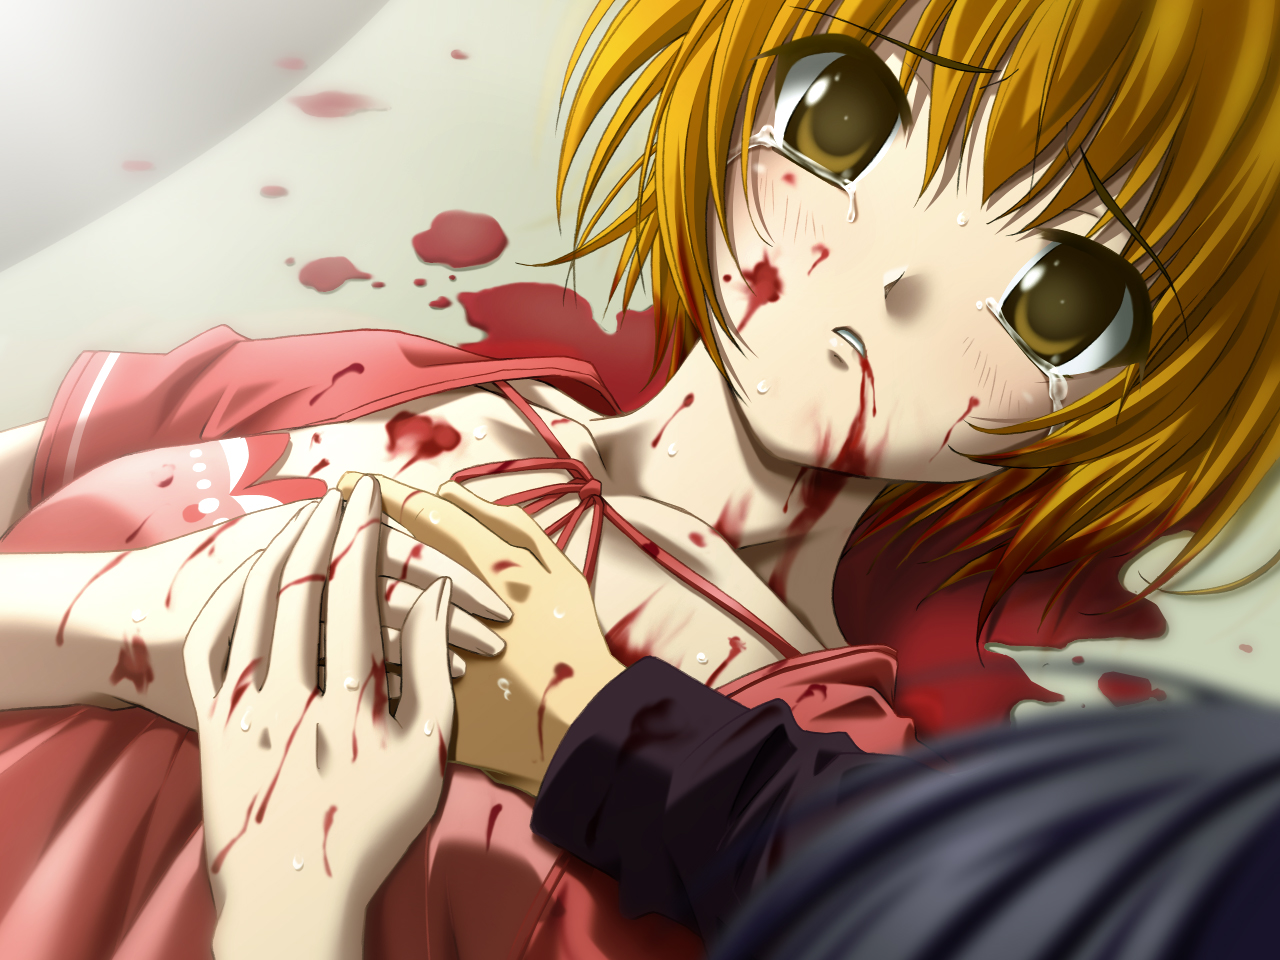 in girl bath anime Blood